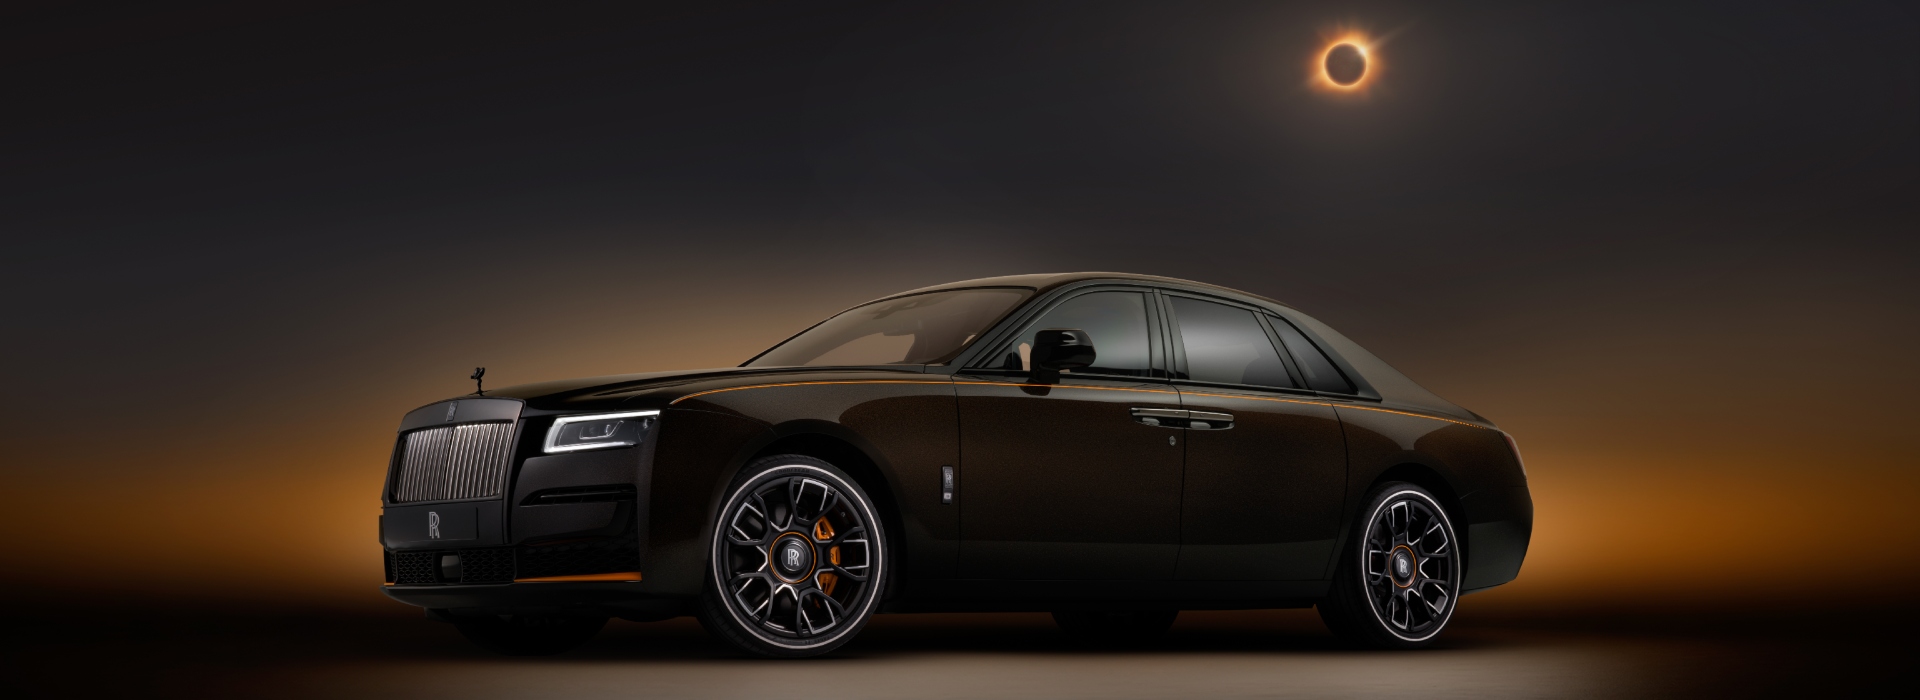 Rolls-Royce Black Badge Ghost Ékleipsis: Kada se luksuz sretne sa nebeskom lepotom